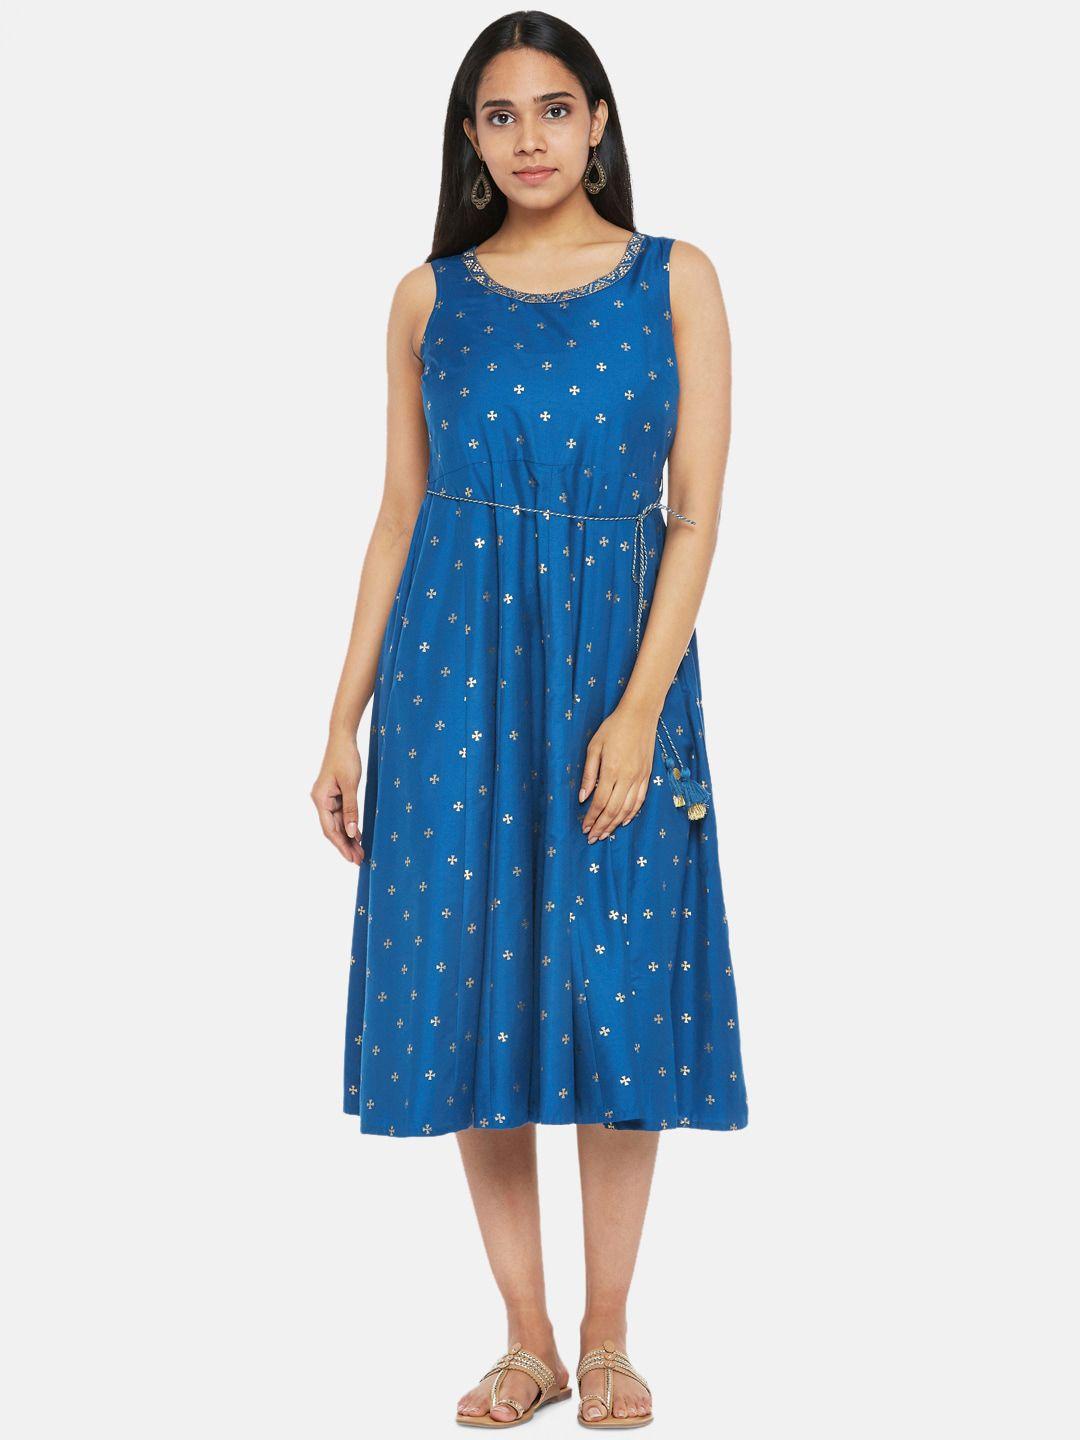 akkriti-by-pantaloons-blue-midi-dress